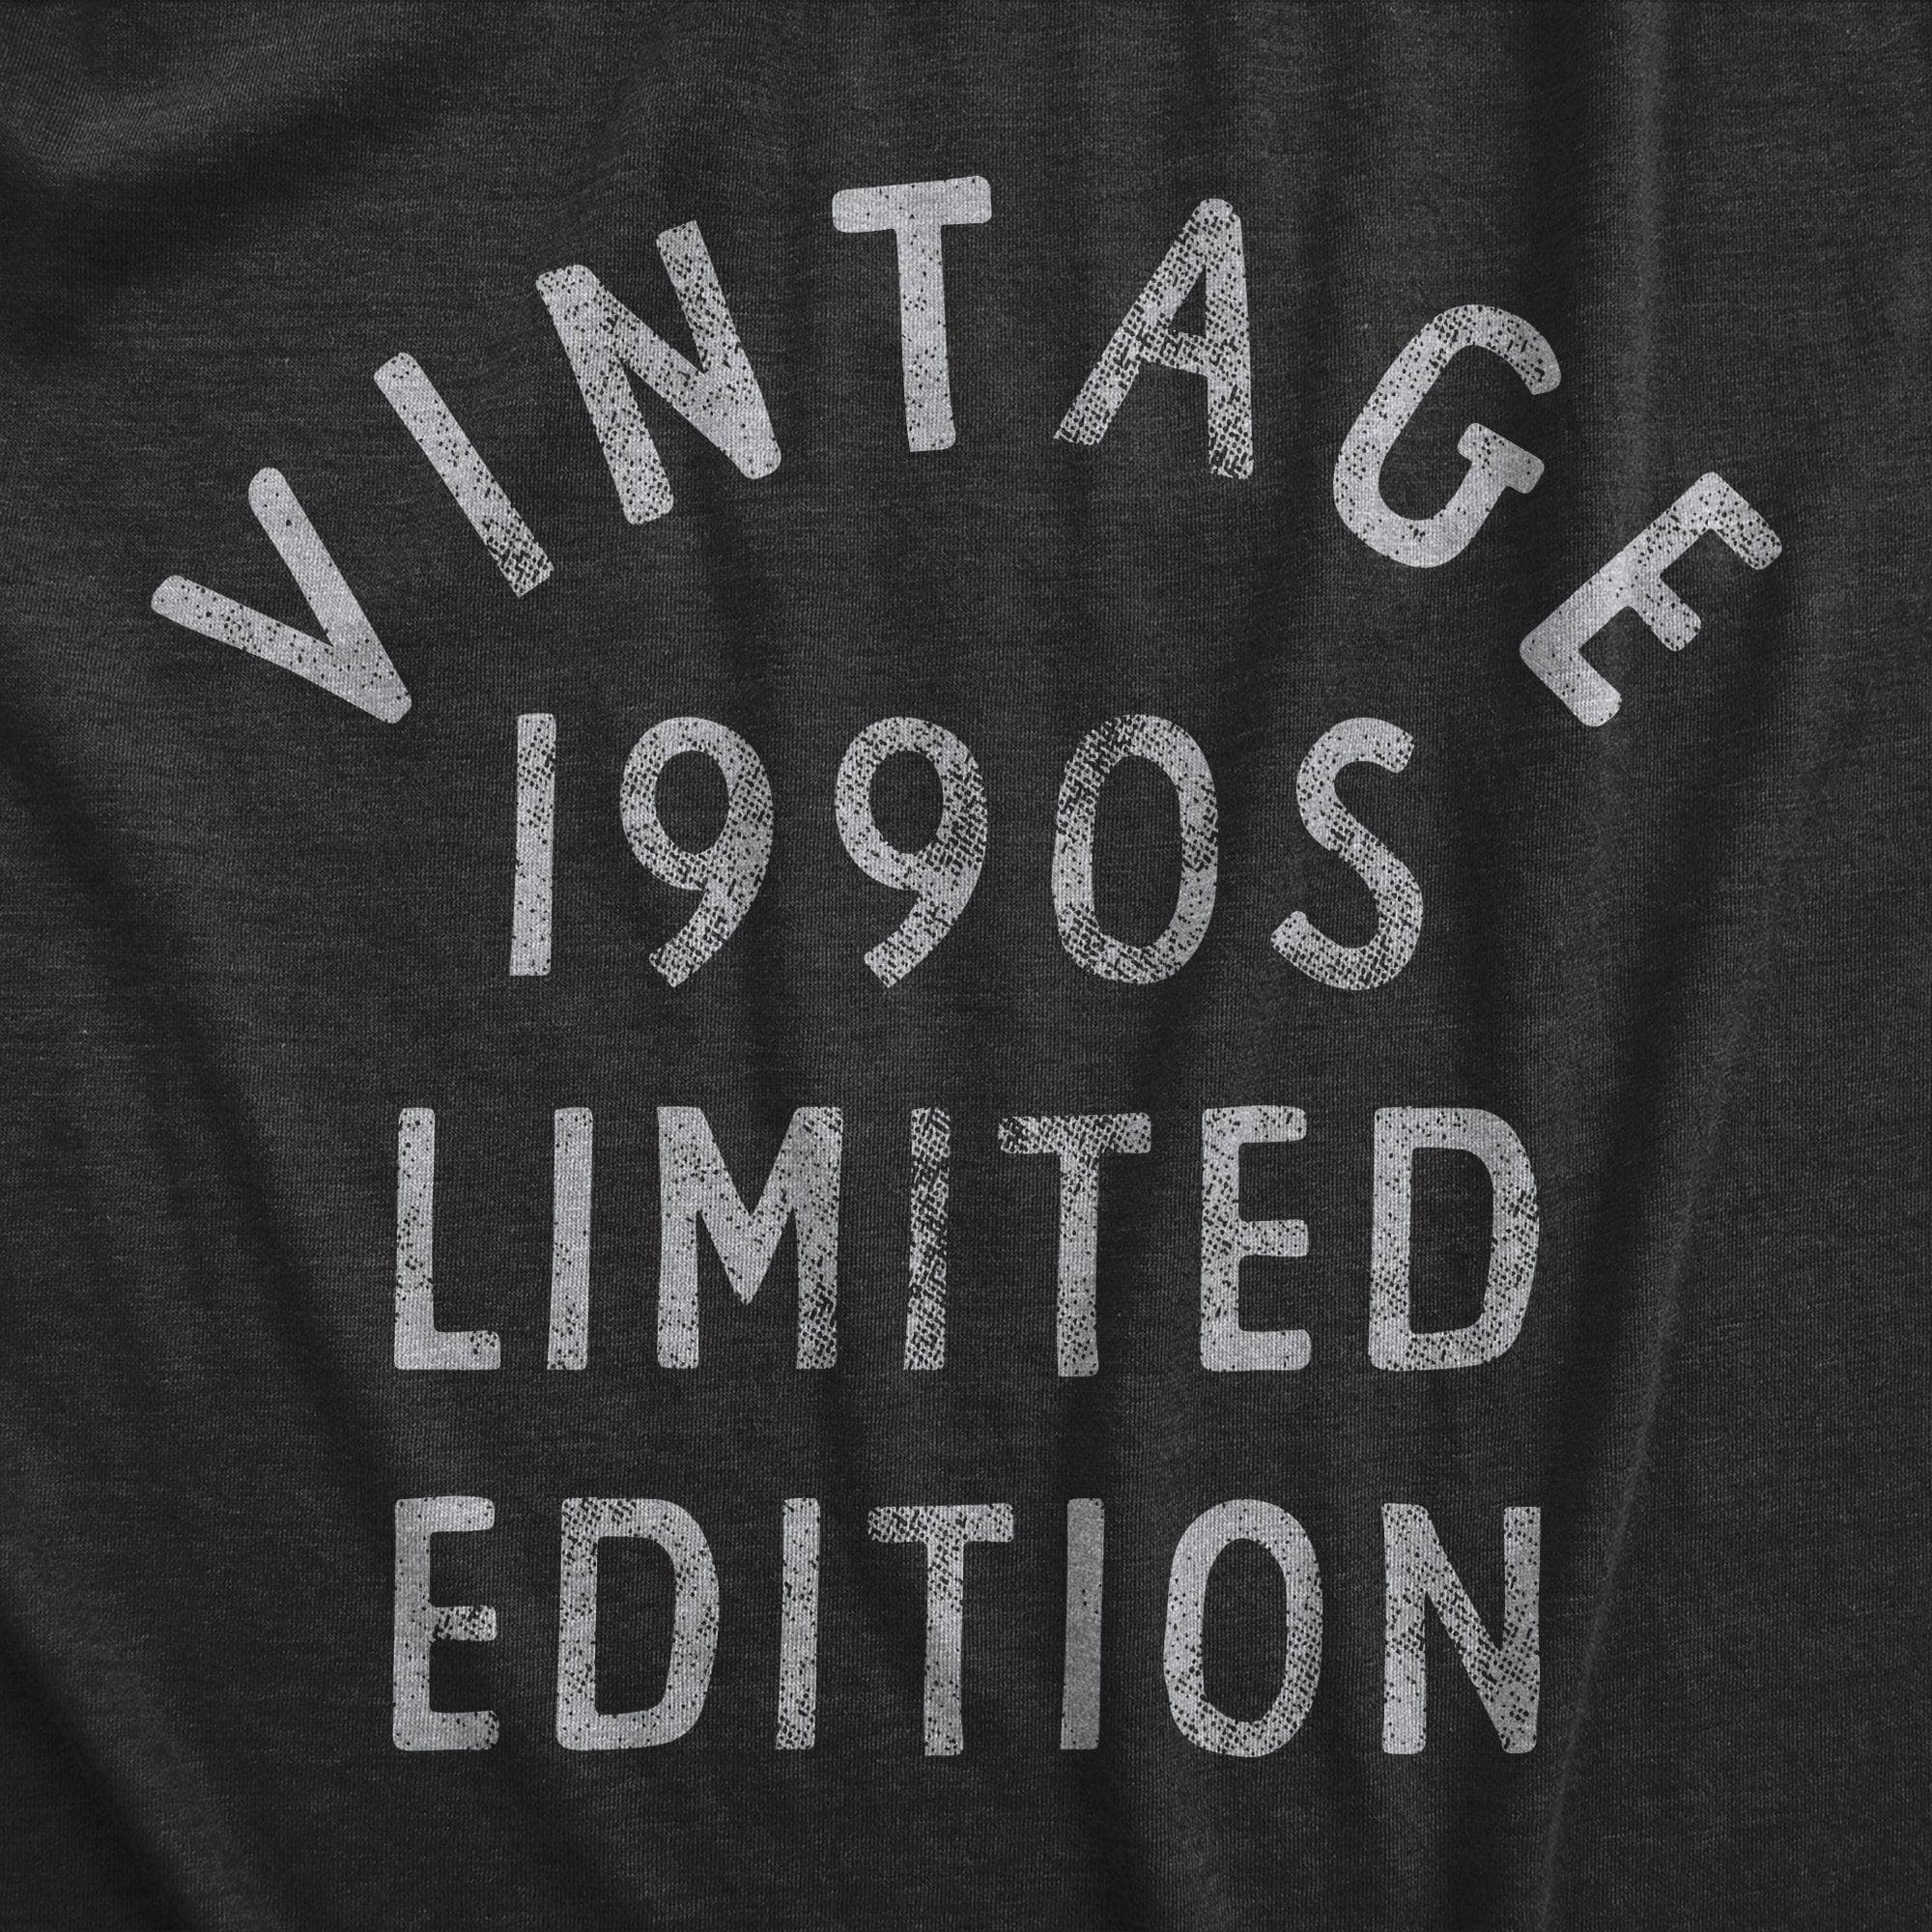 Vintage 1990s Limited Edition Men's Tshirt  -  Crazy Dog T-Shirts